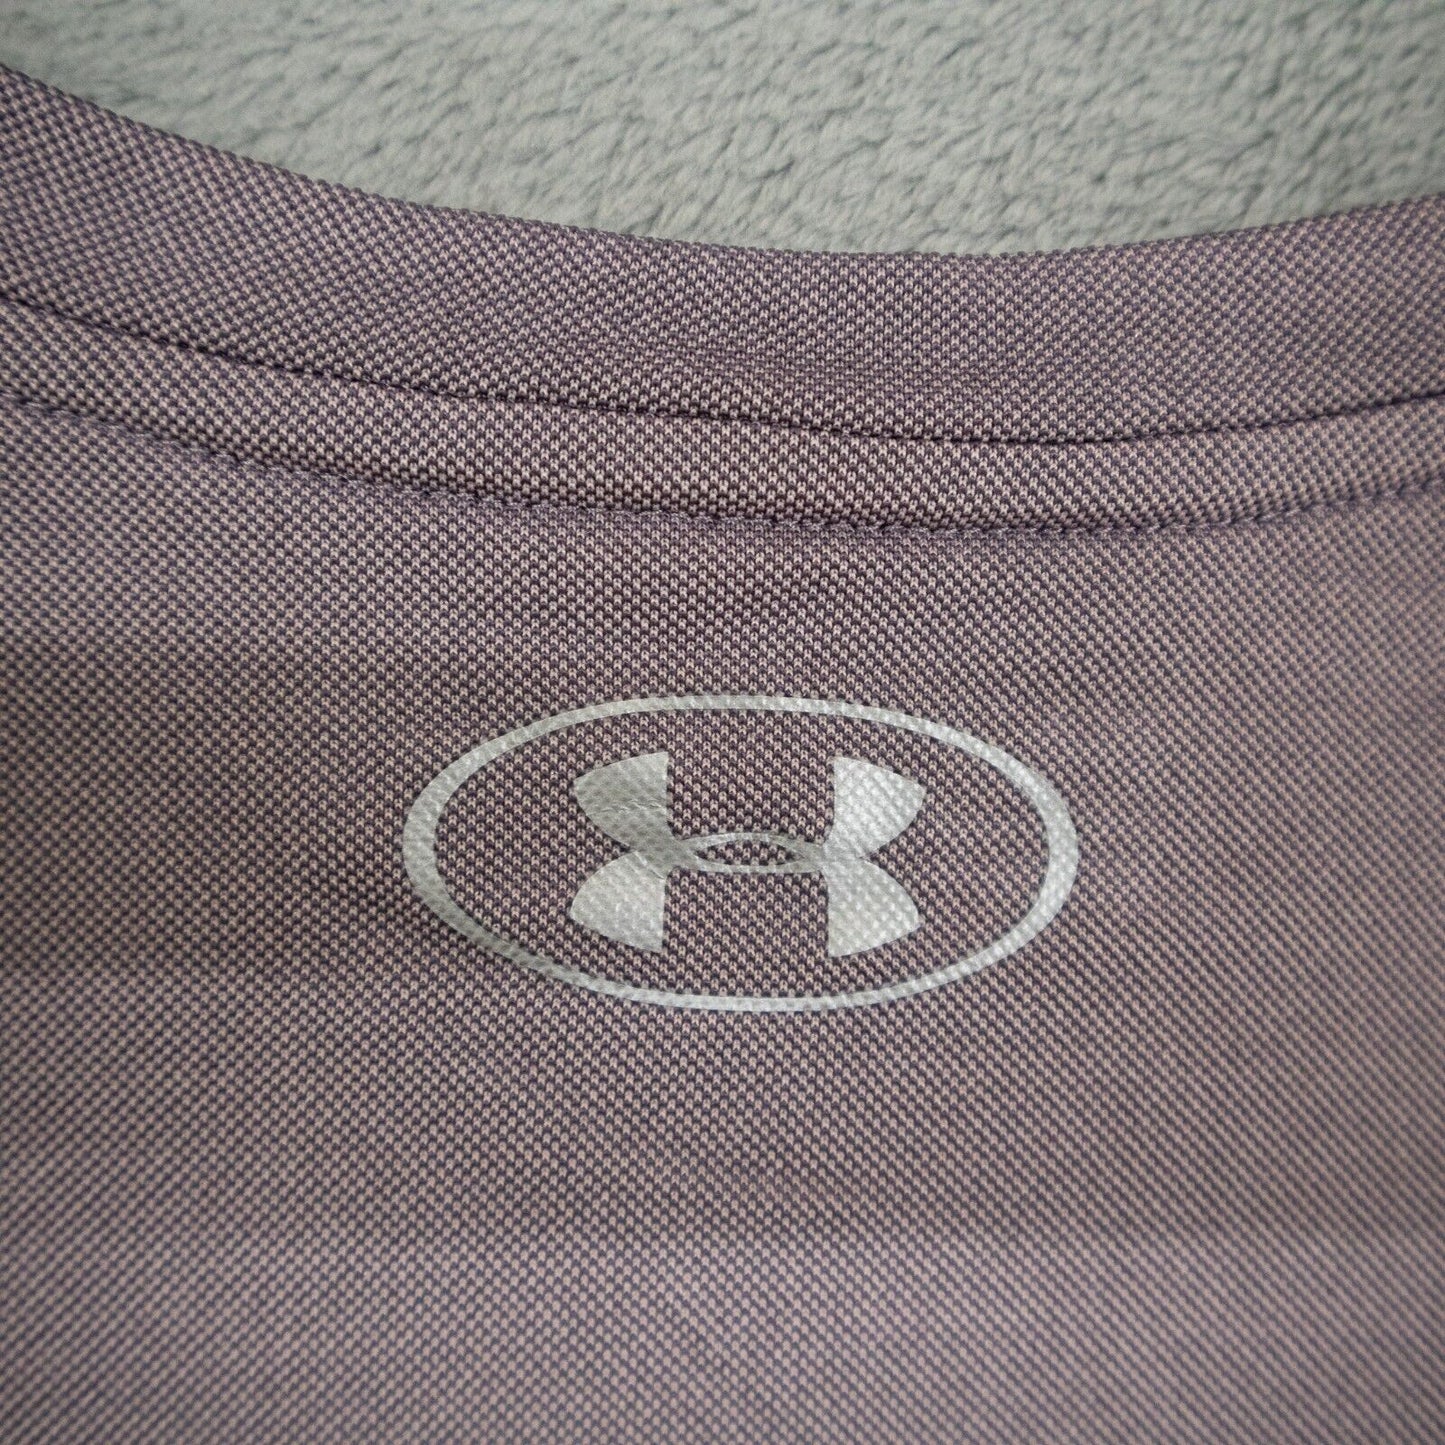 Under Armour Women's Heat Gear Sports V-Neck T-Shirt Short Sleeve Brown Size S